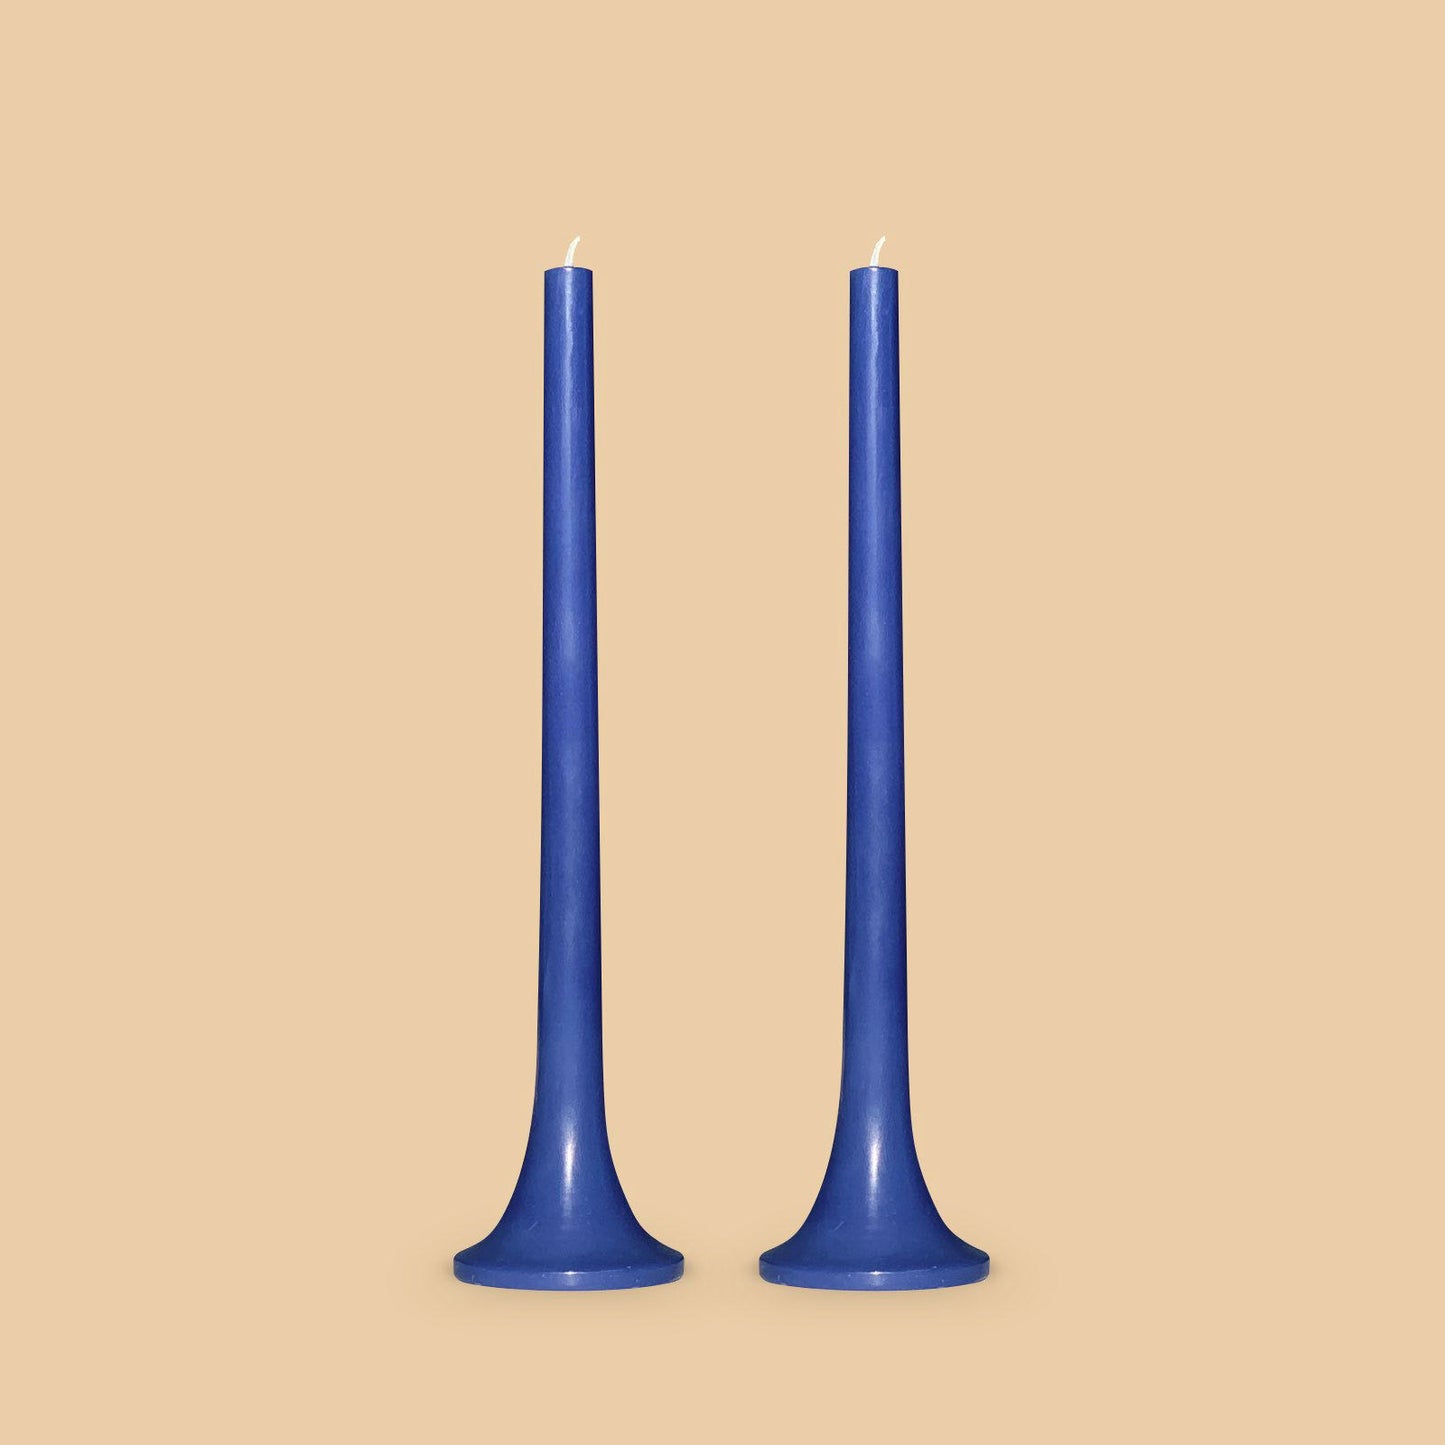 Modern blue taper candles